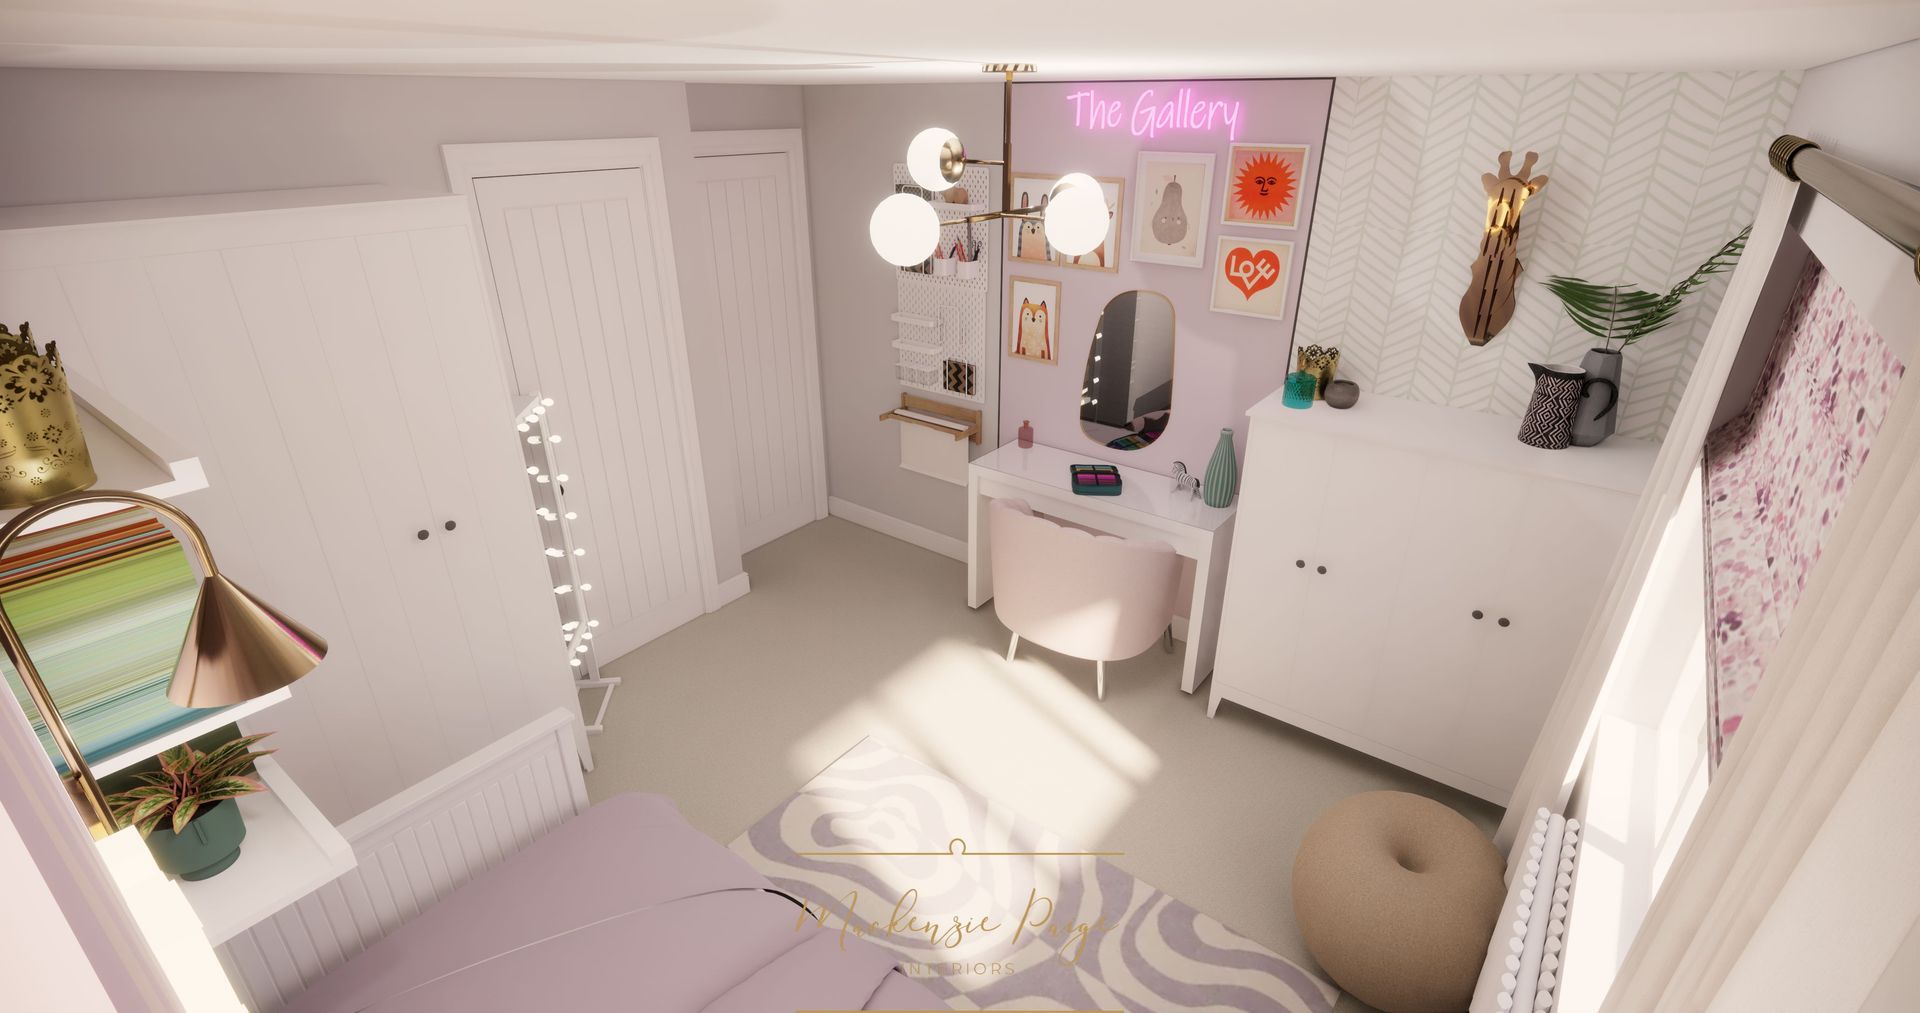 interior design for child's bedroom by Surrey based interior designer